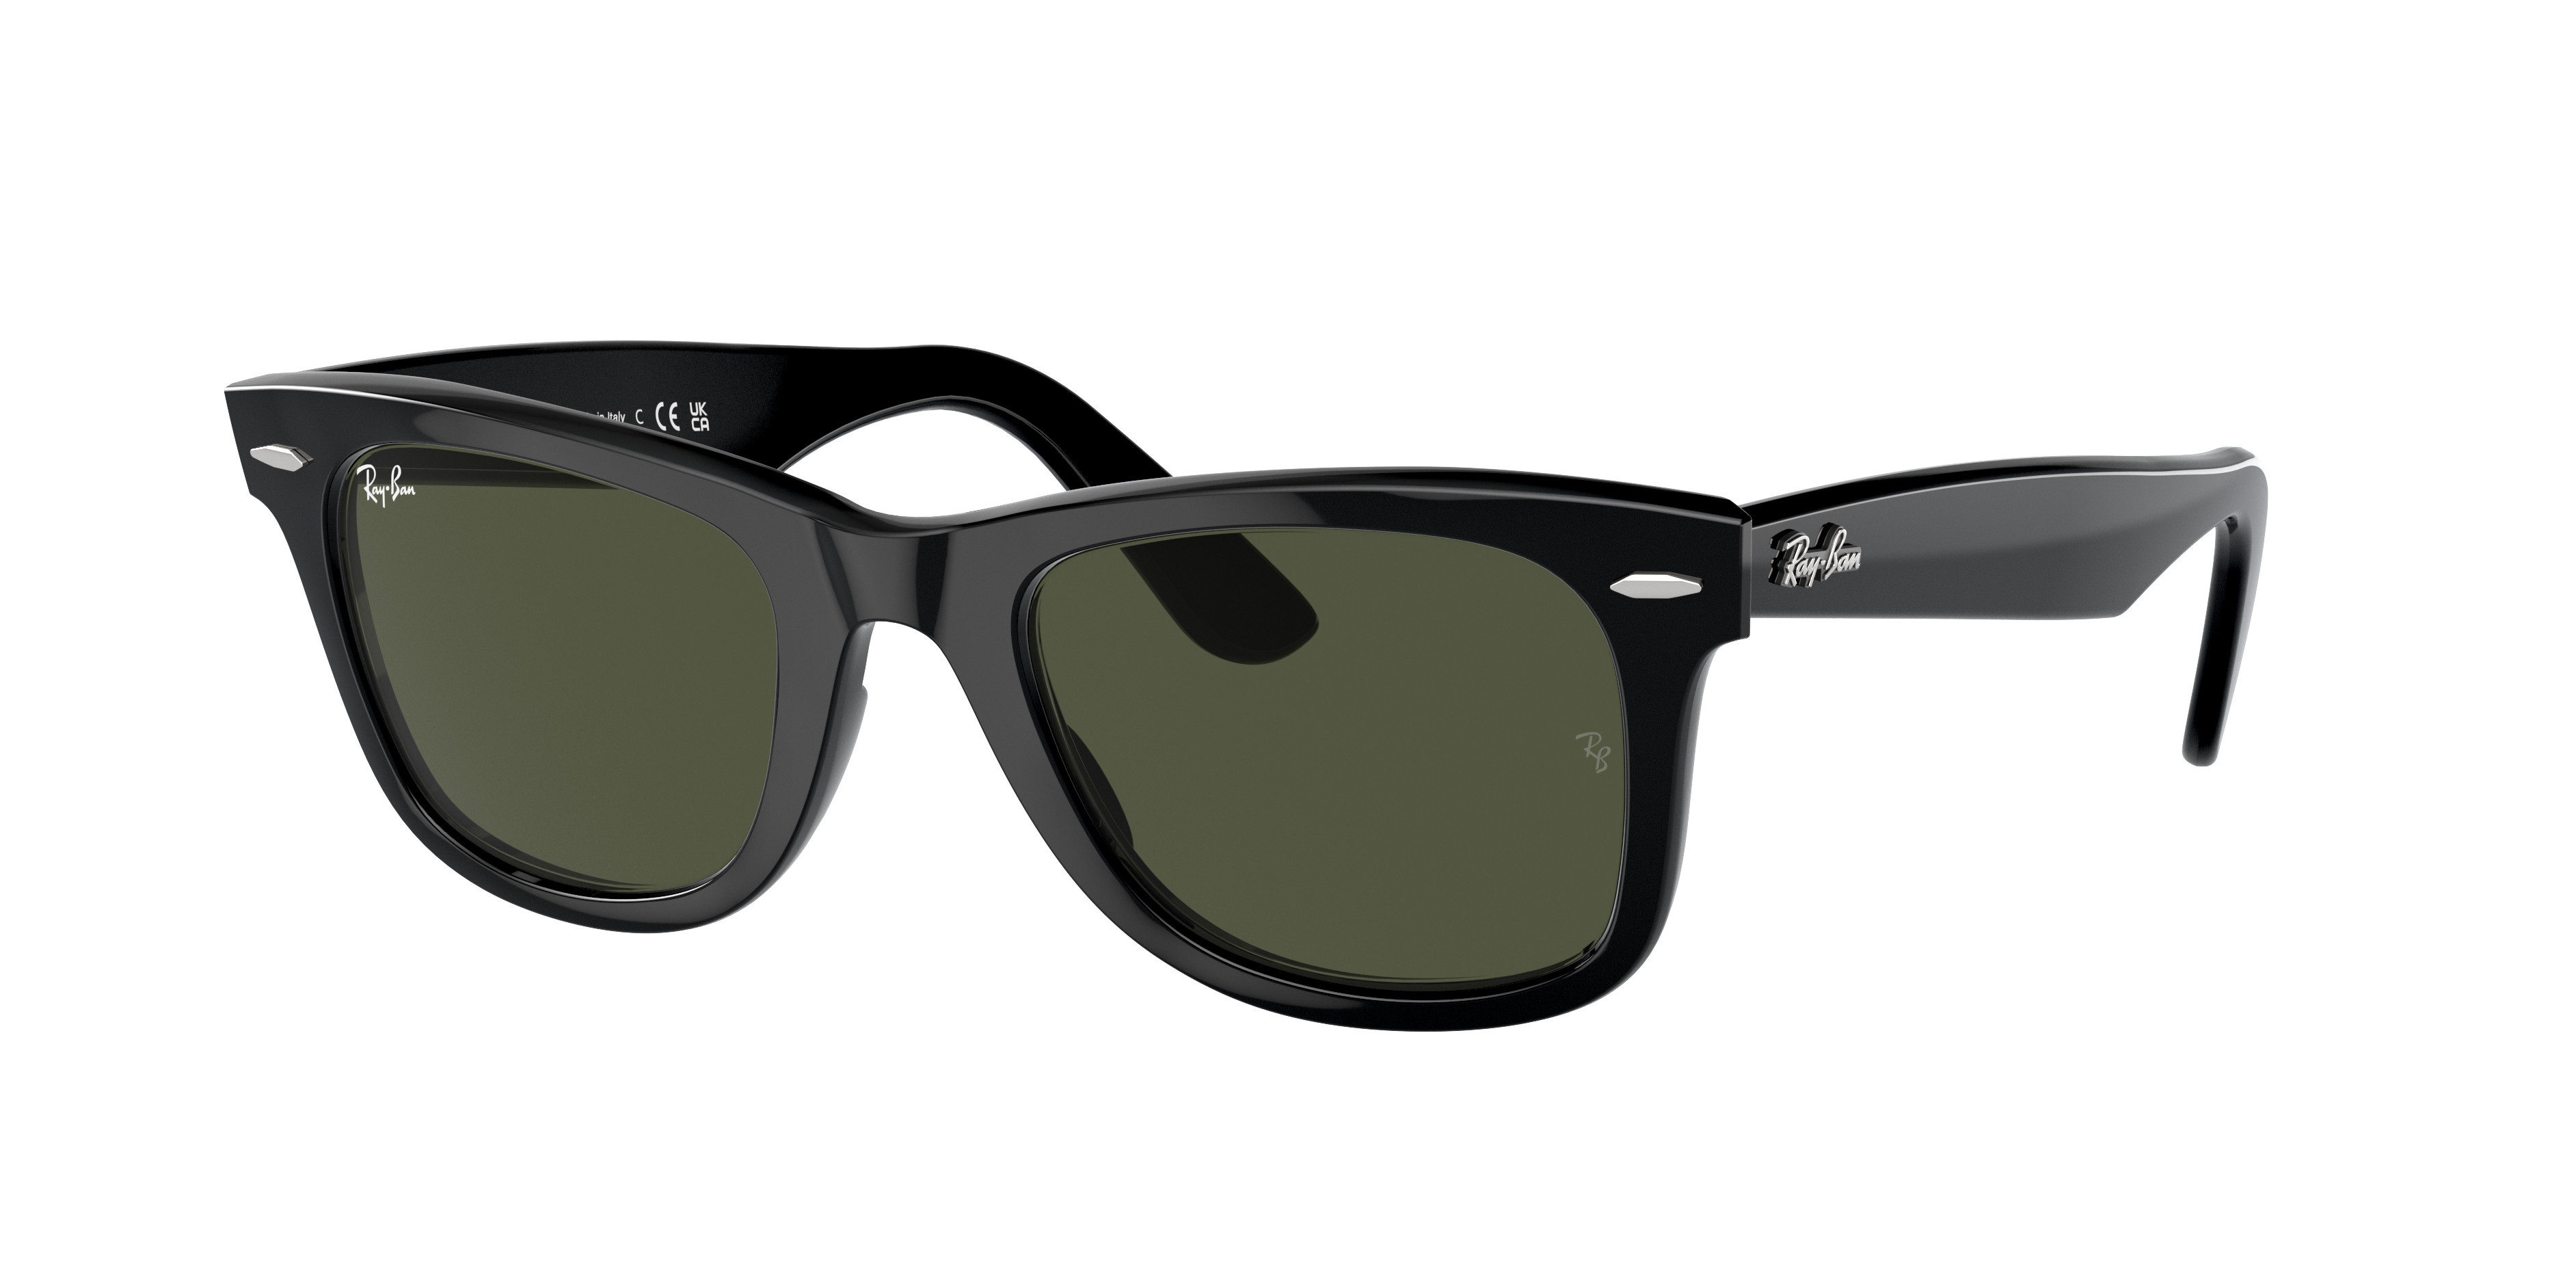 apt Alarmerende offer Original Wayfarer Classic Sunglasses in Black and Green | Ray-Ban®